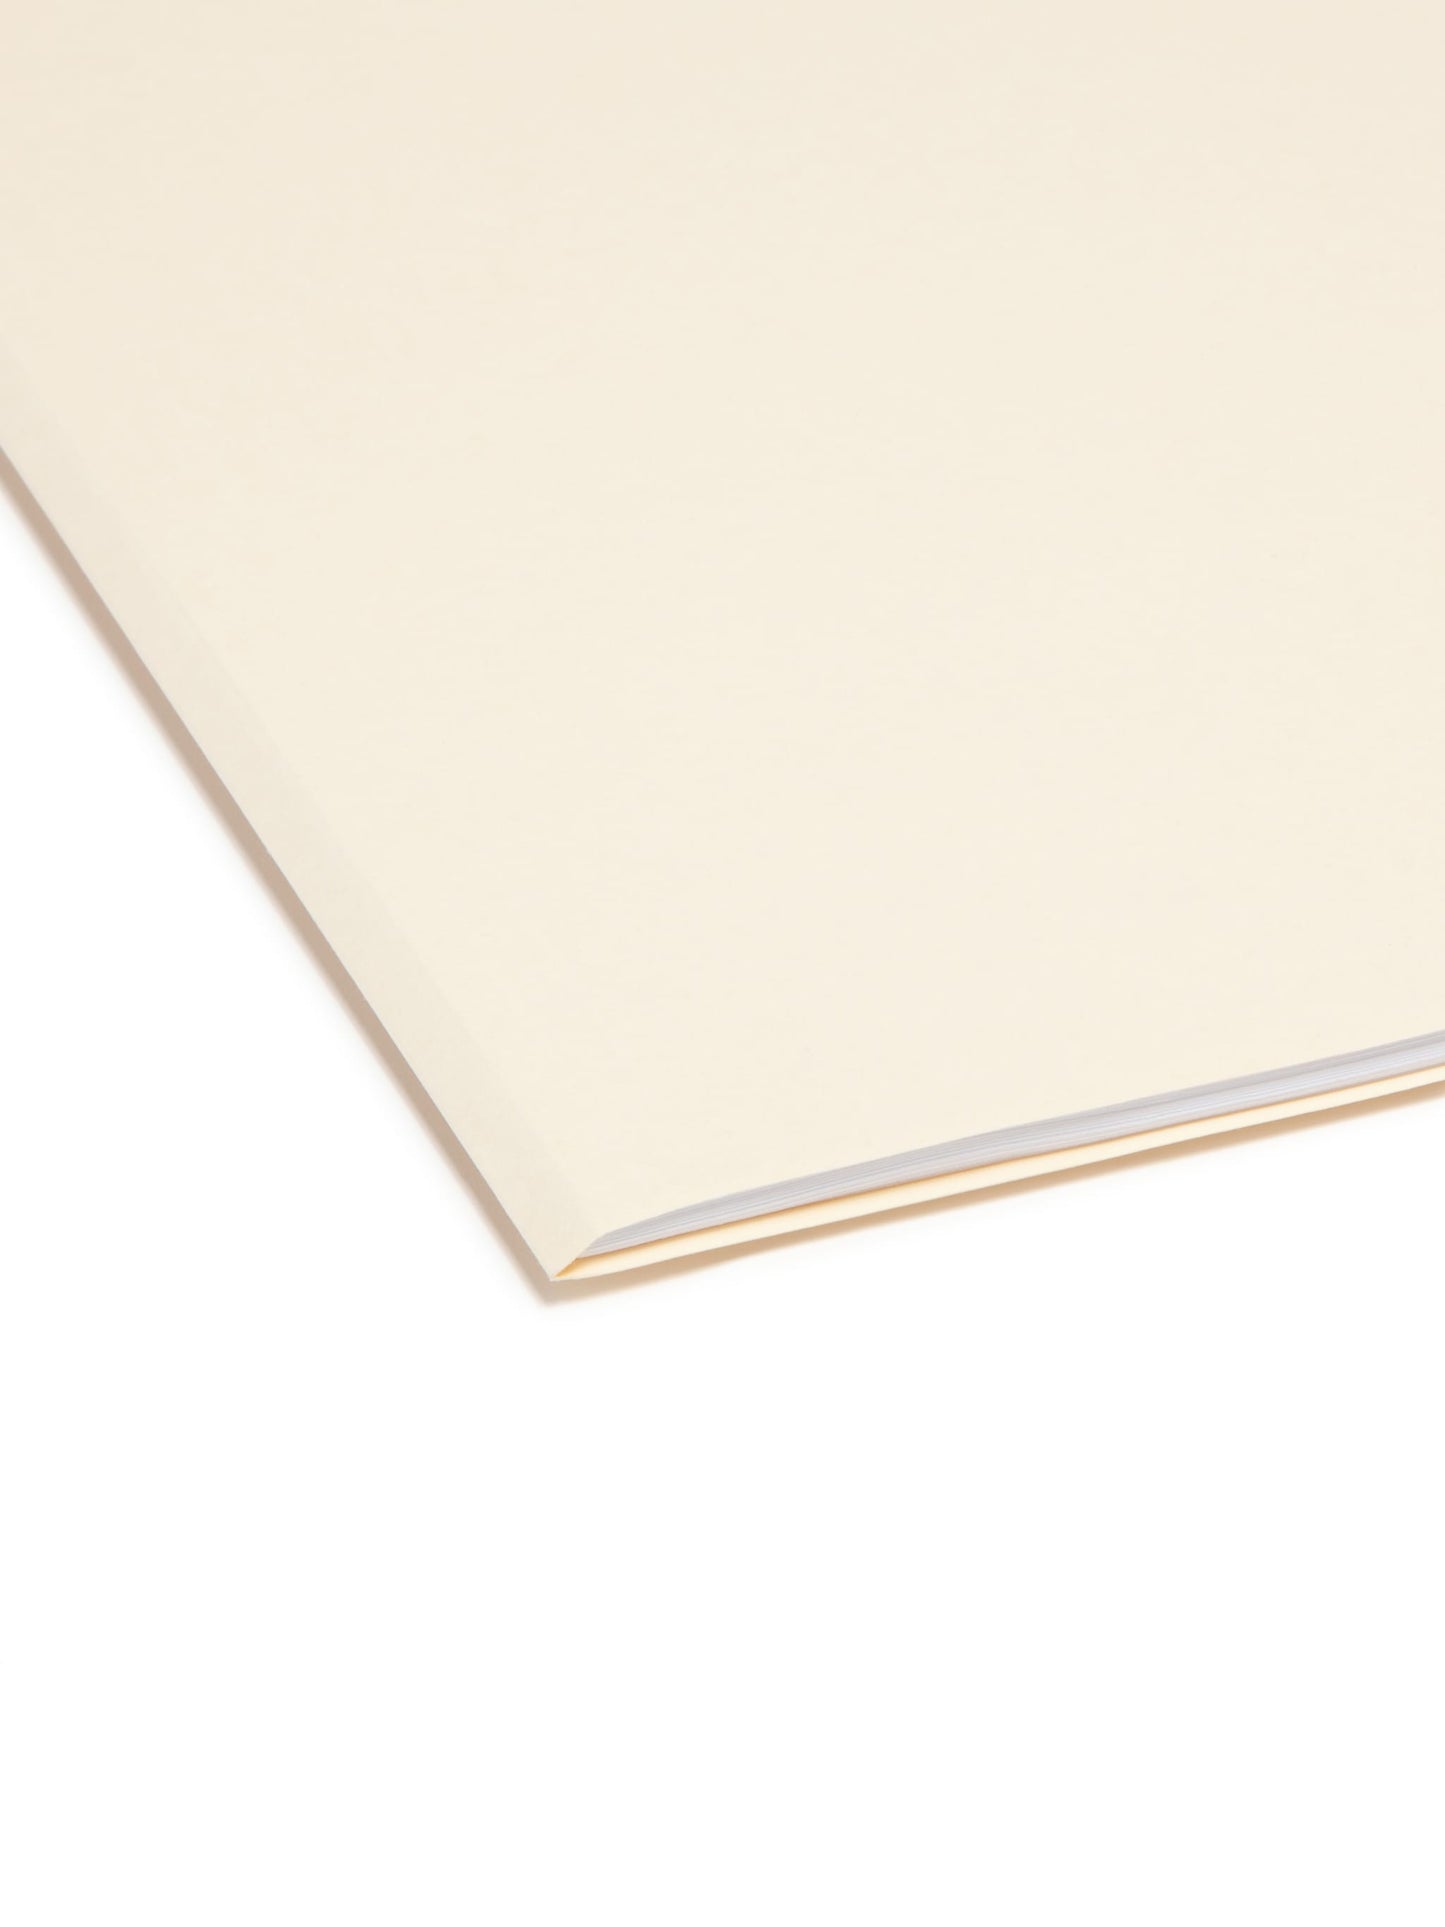 SuperTab® Reinforced Tab File Folders, Manila Color, Letter Size, Set of 100, 086486103954